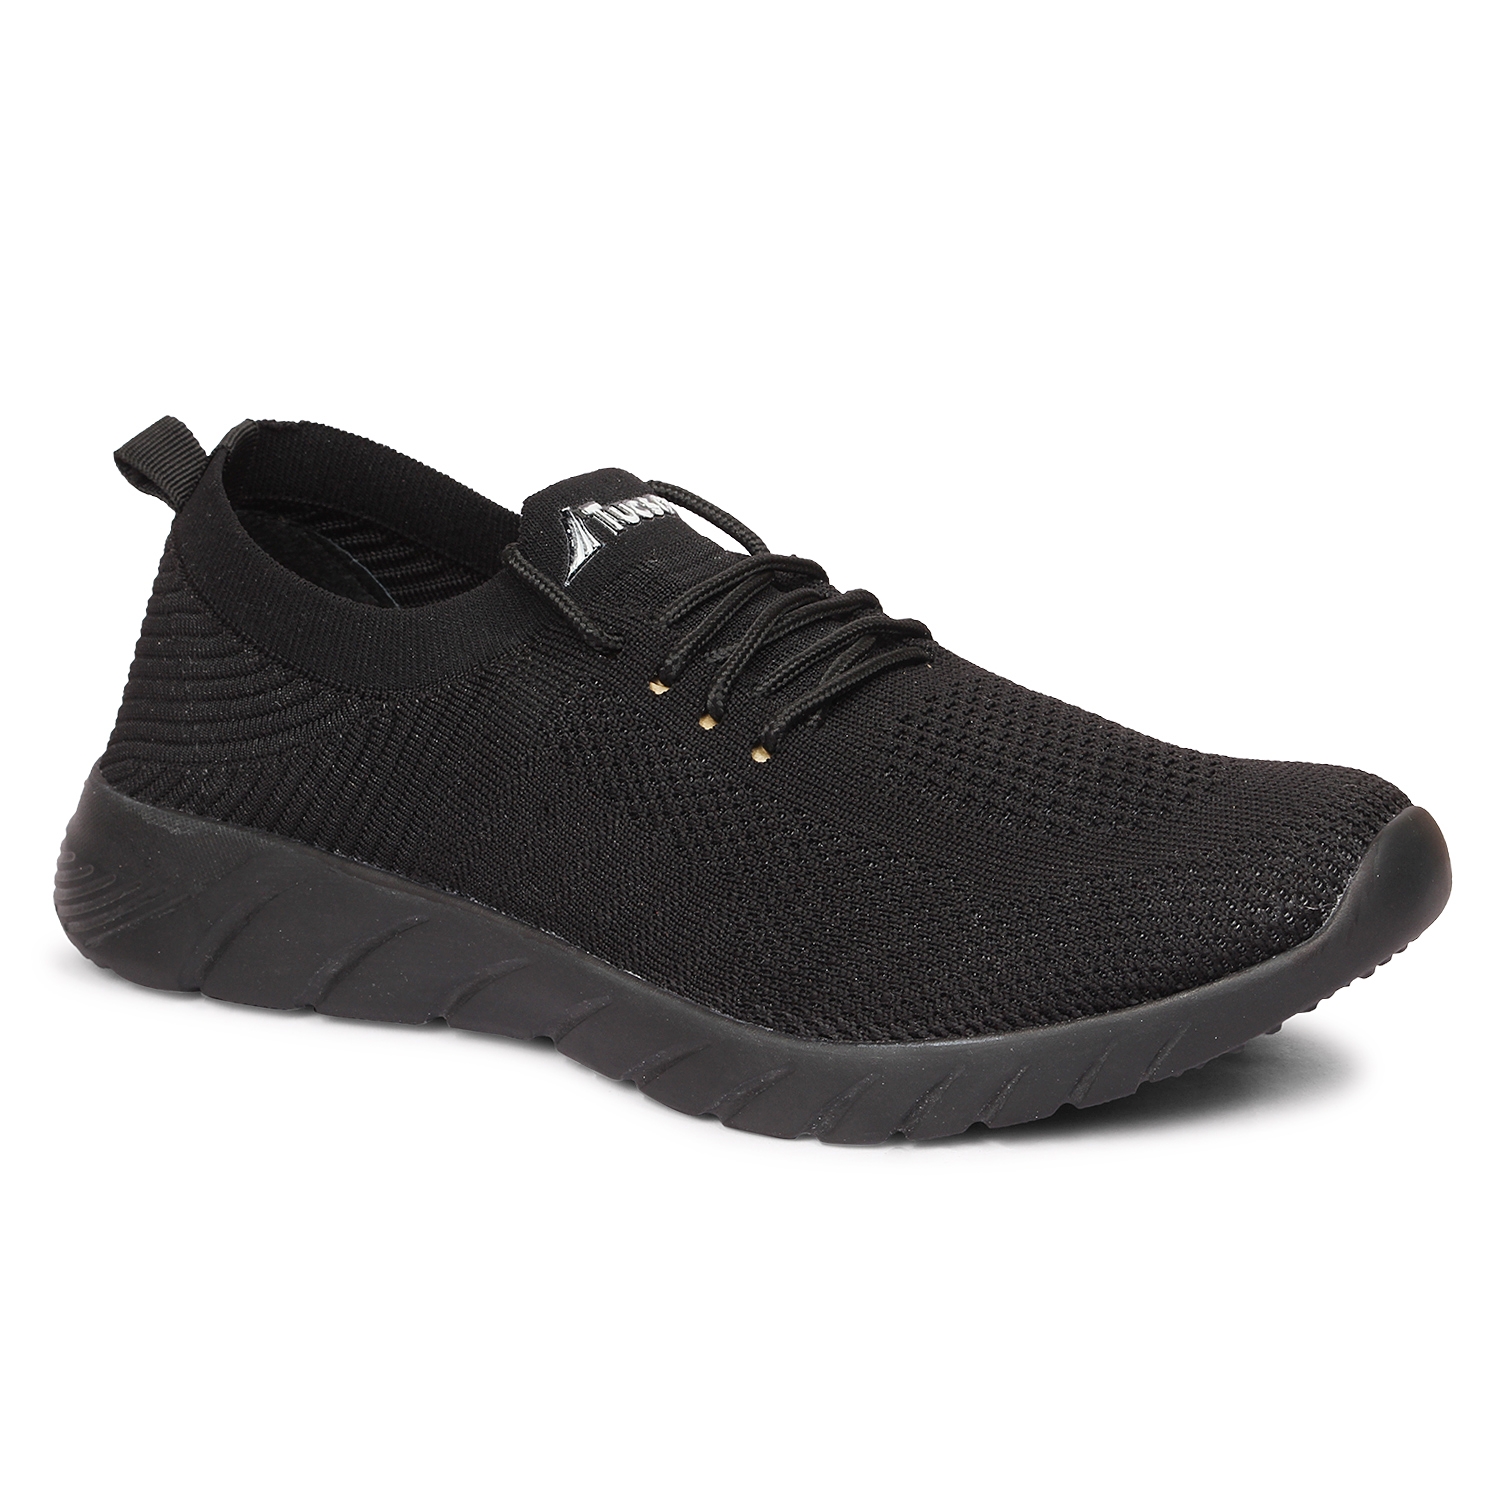 Keen Utility Tucson Low Steel Toe Work Hiker Shoes Size 11 Black ASTM  F2892-11 | eBay